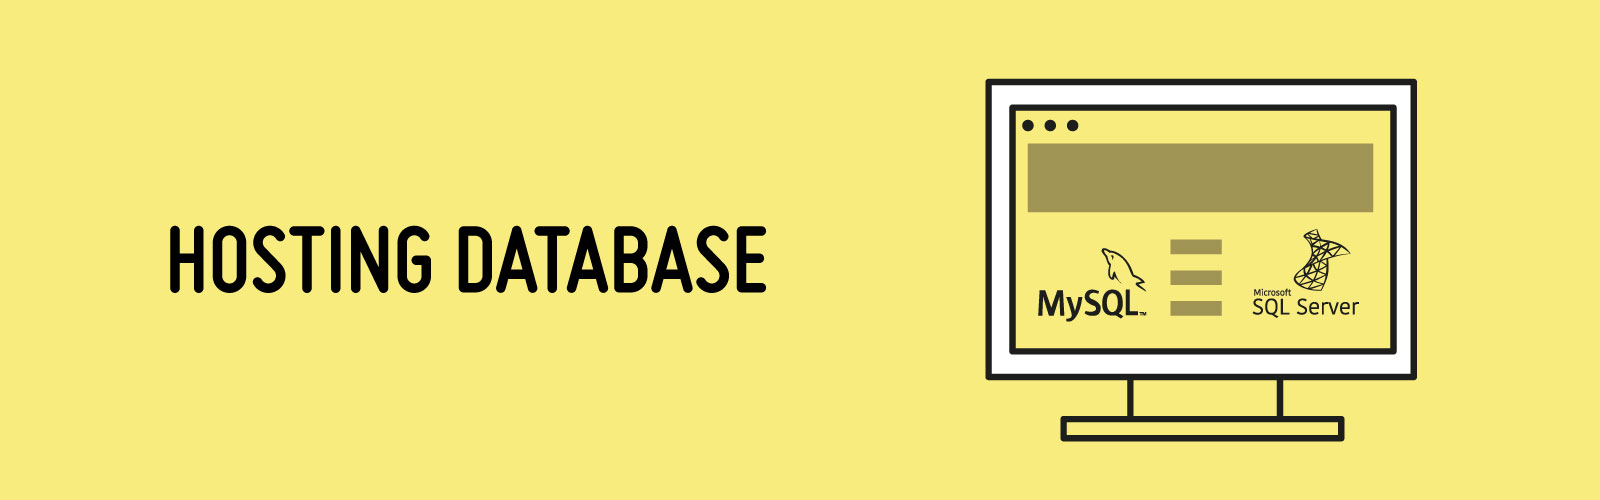 Database for Hosting Services